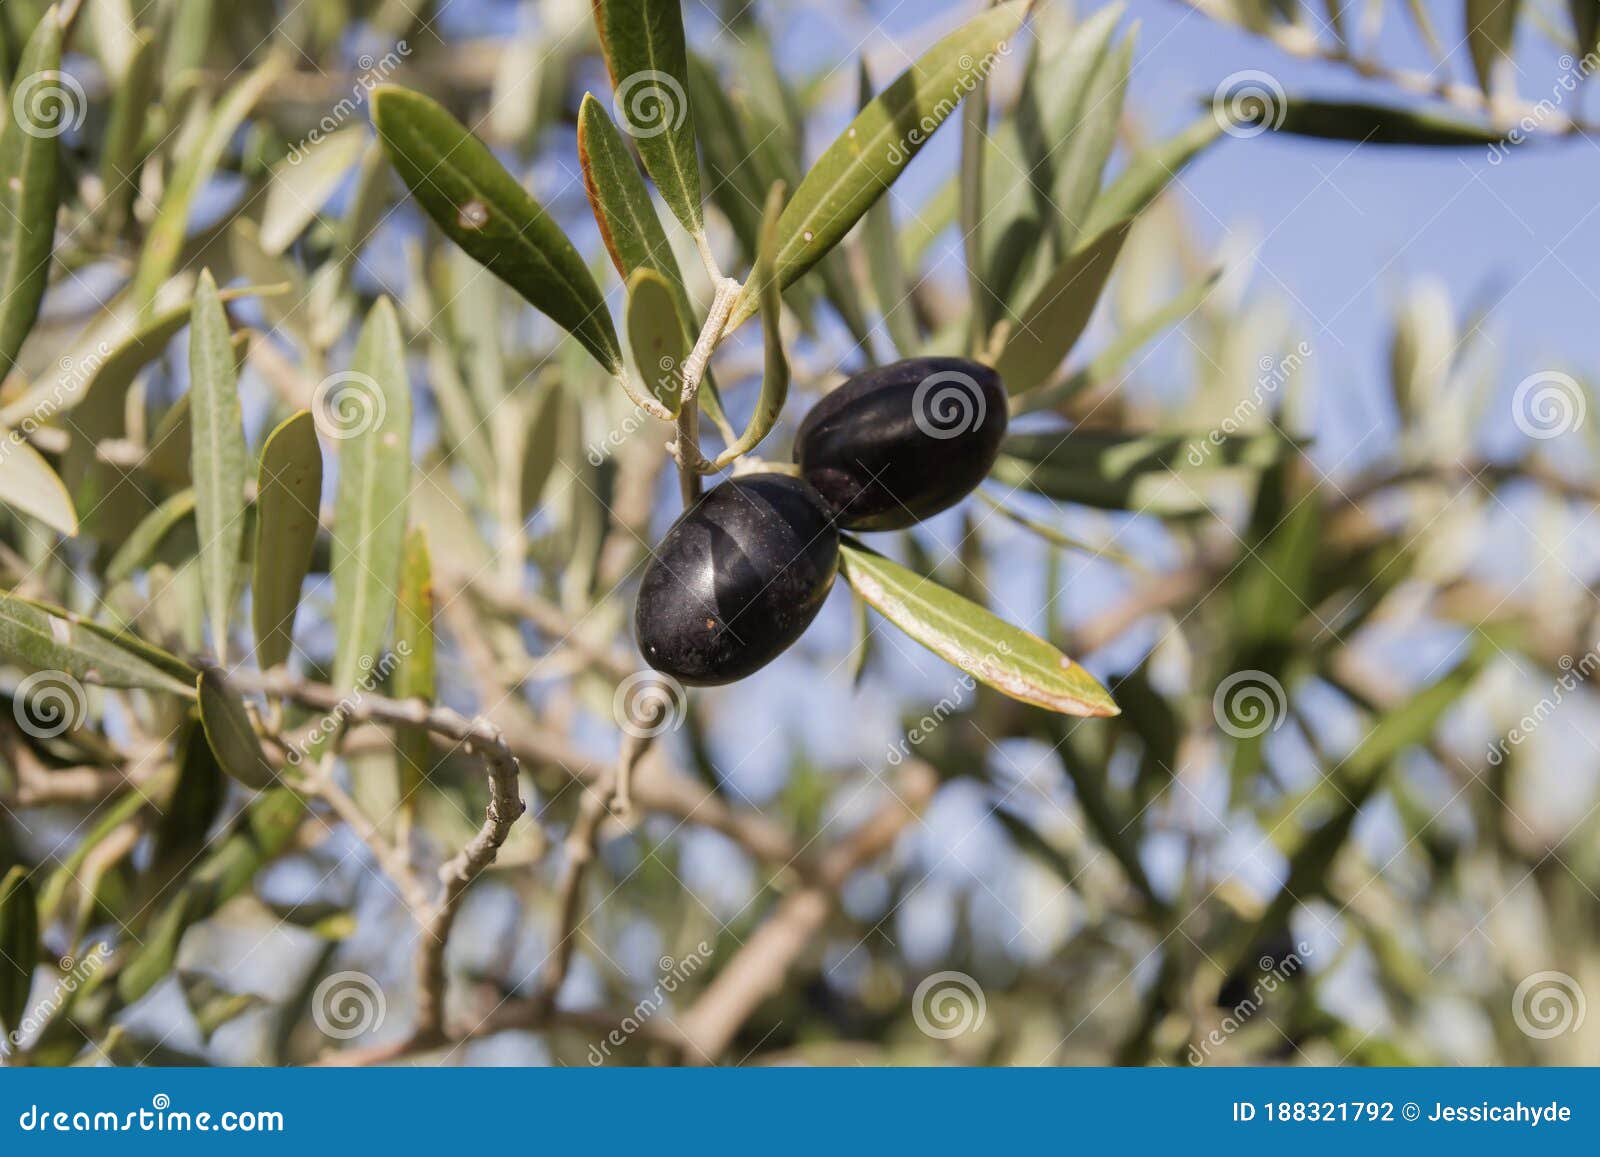 Ripe Olive Tree Black Fruits Stock Photo - Image of detail